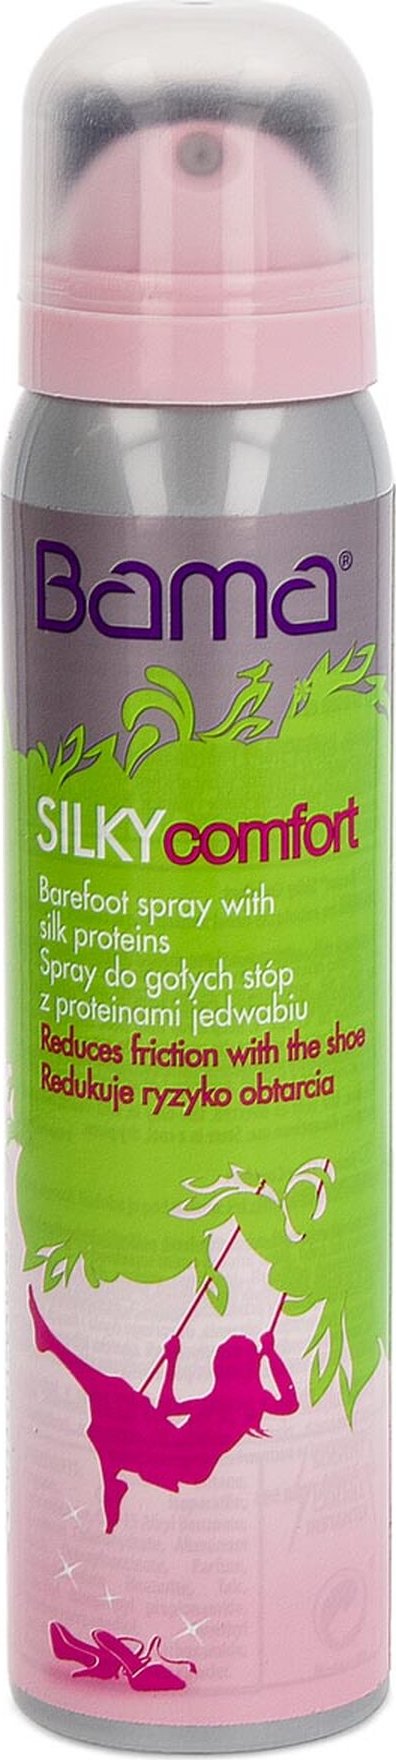 Sprej Bama Silky Comfort 03000 PL/HU/RO/MD